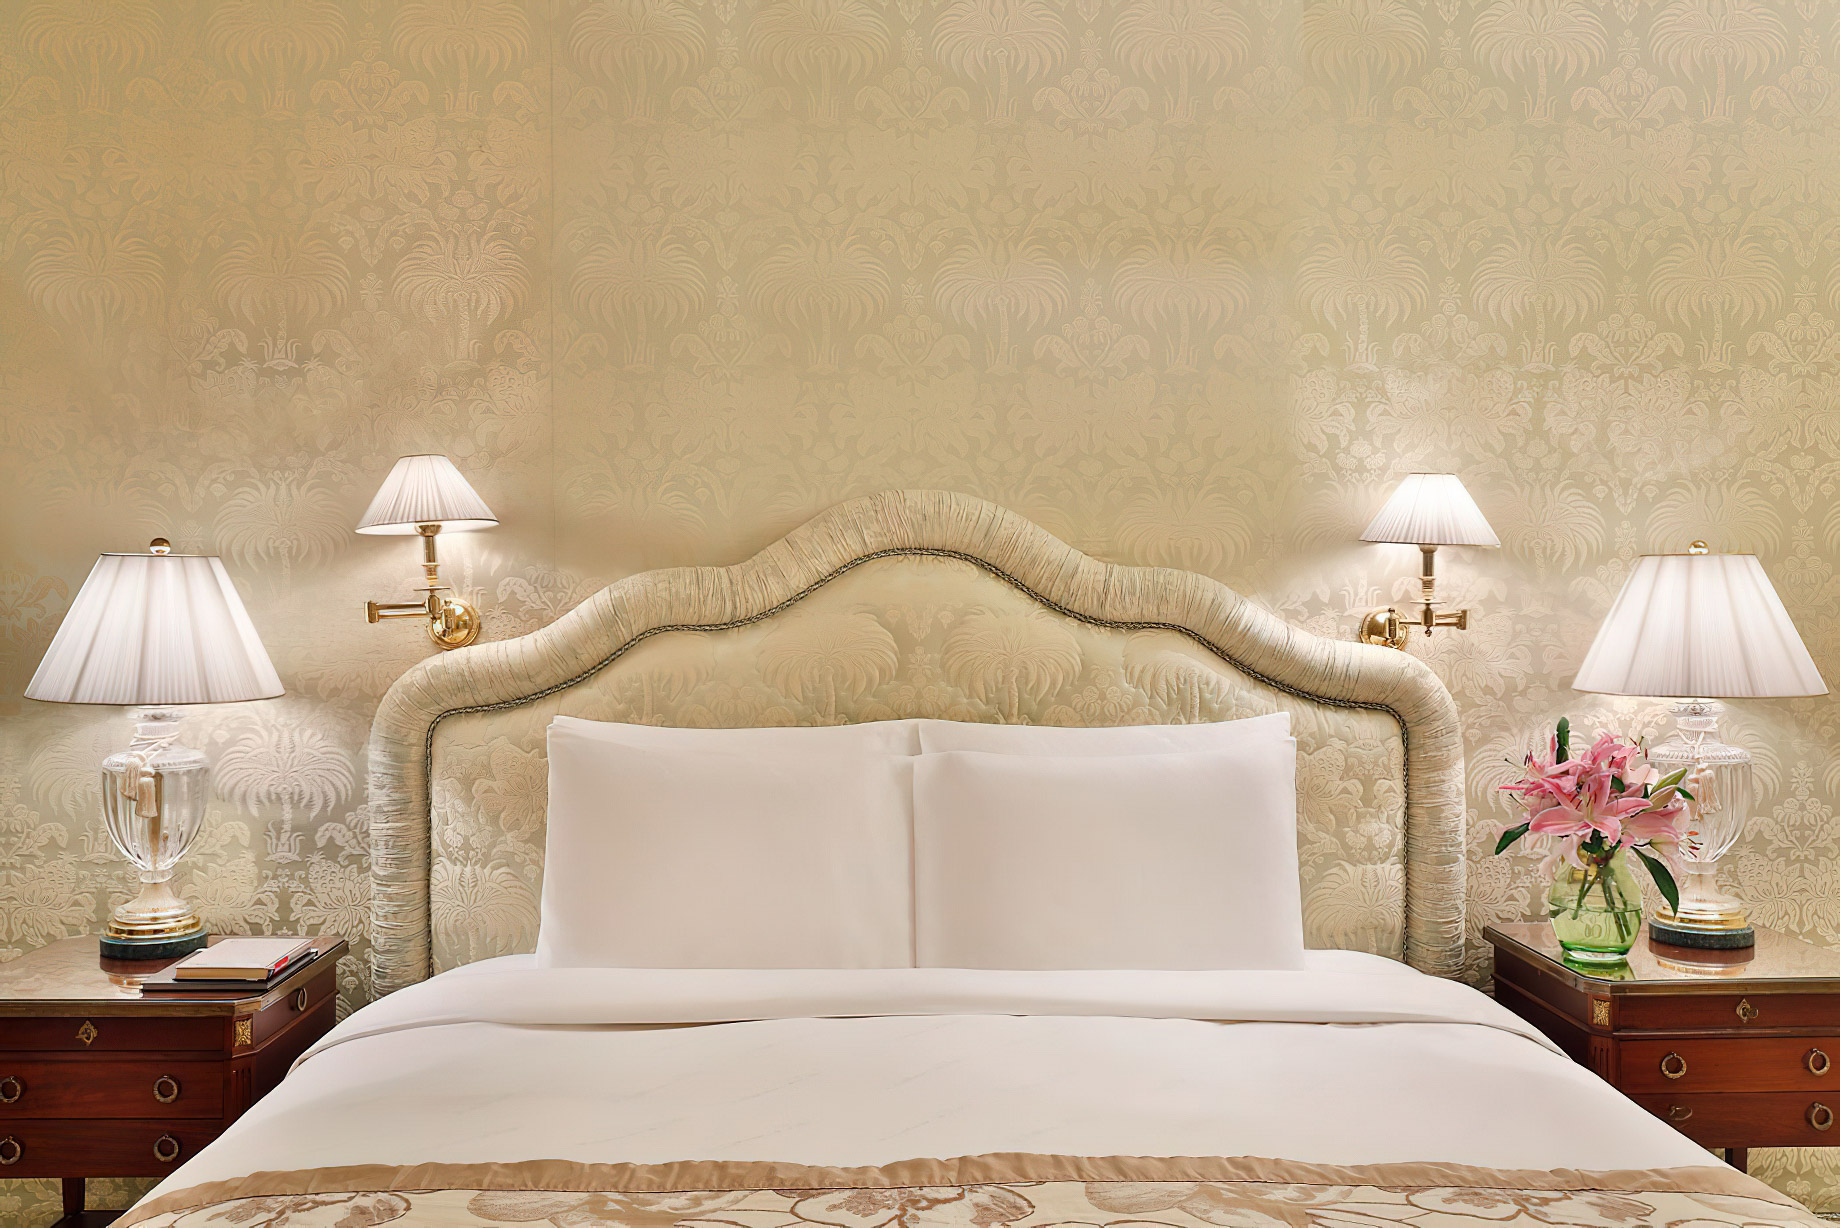 The Ritz-Carlton, Bahrain Resort Hotel – Manama, Bahrain – Executive Suite Bed